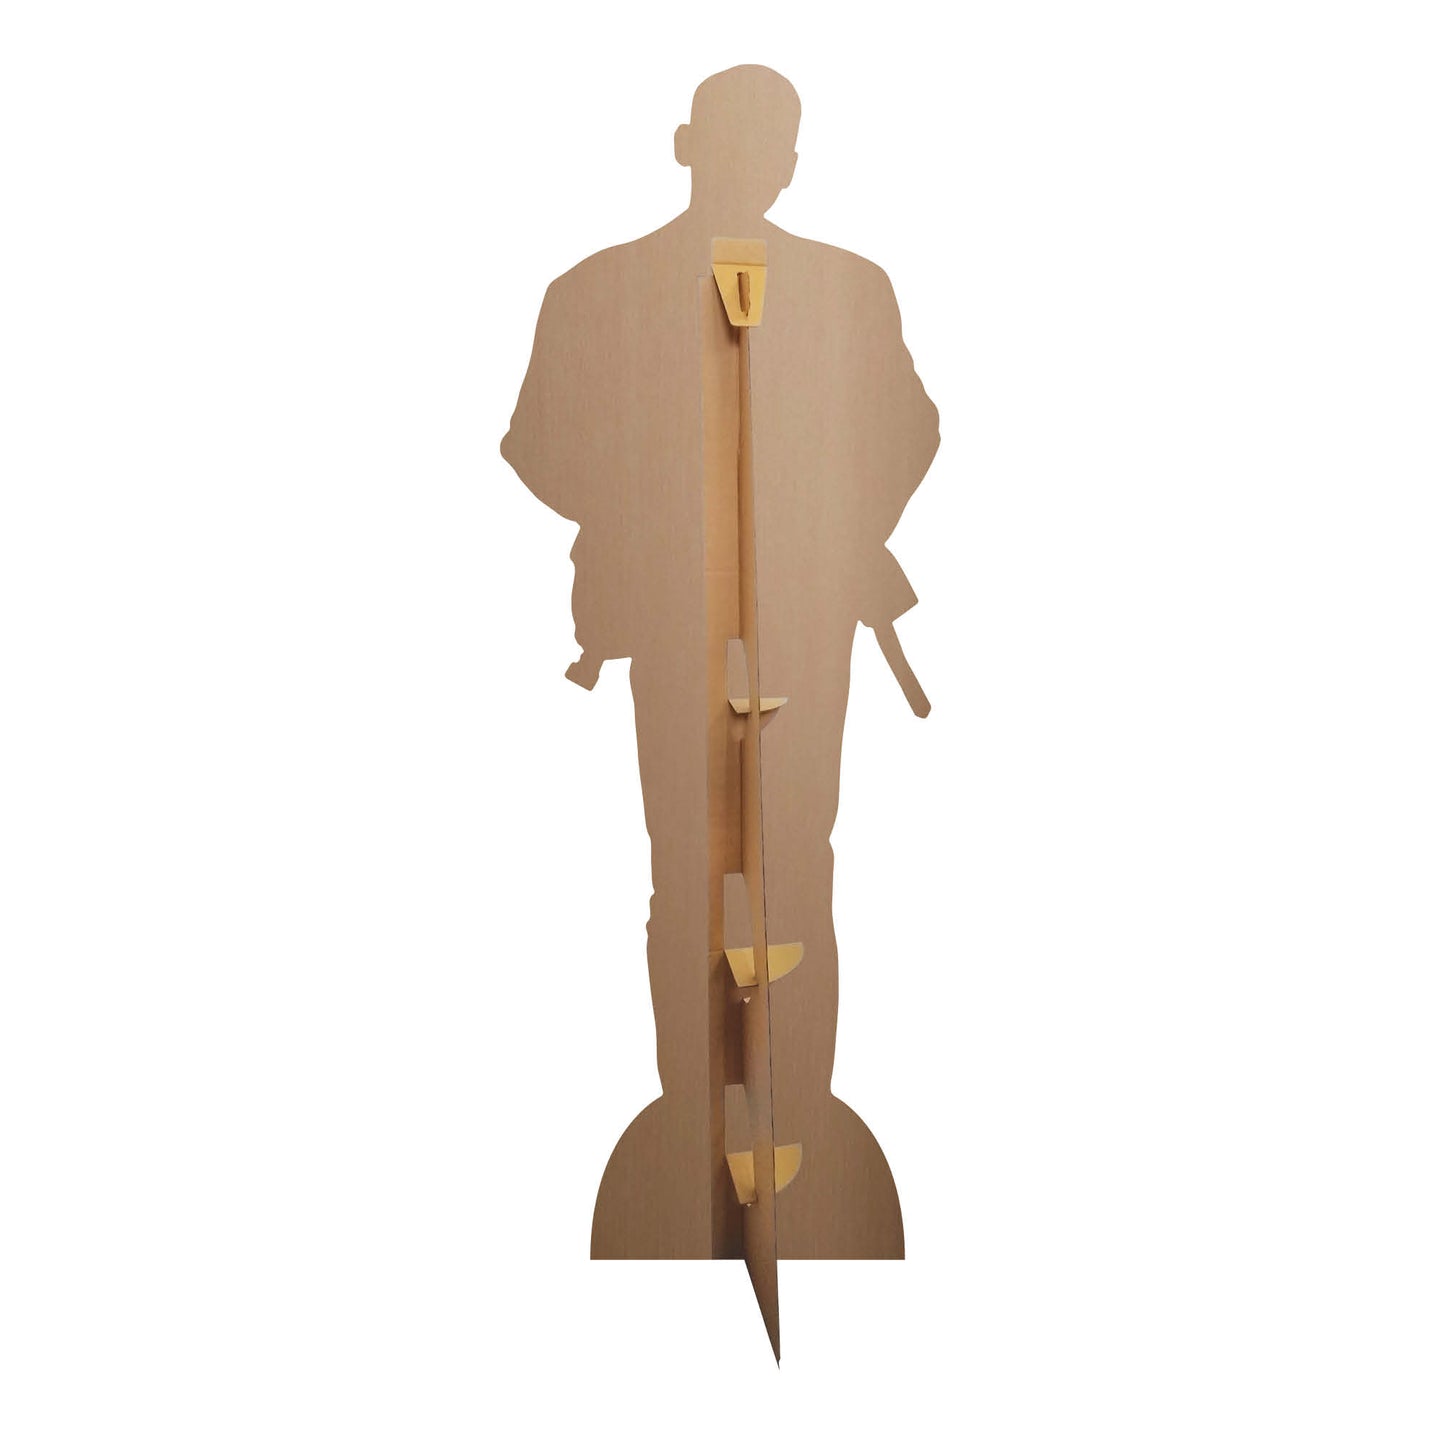 CS1134 Olly Alexander Height 175cm Lifesize Cardboard Cut Out With Mini